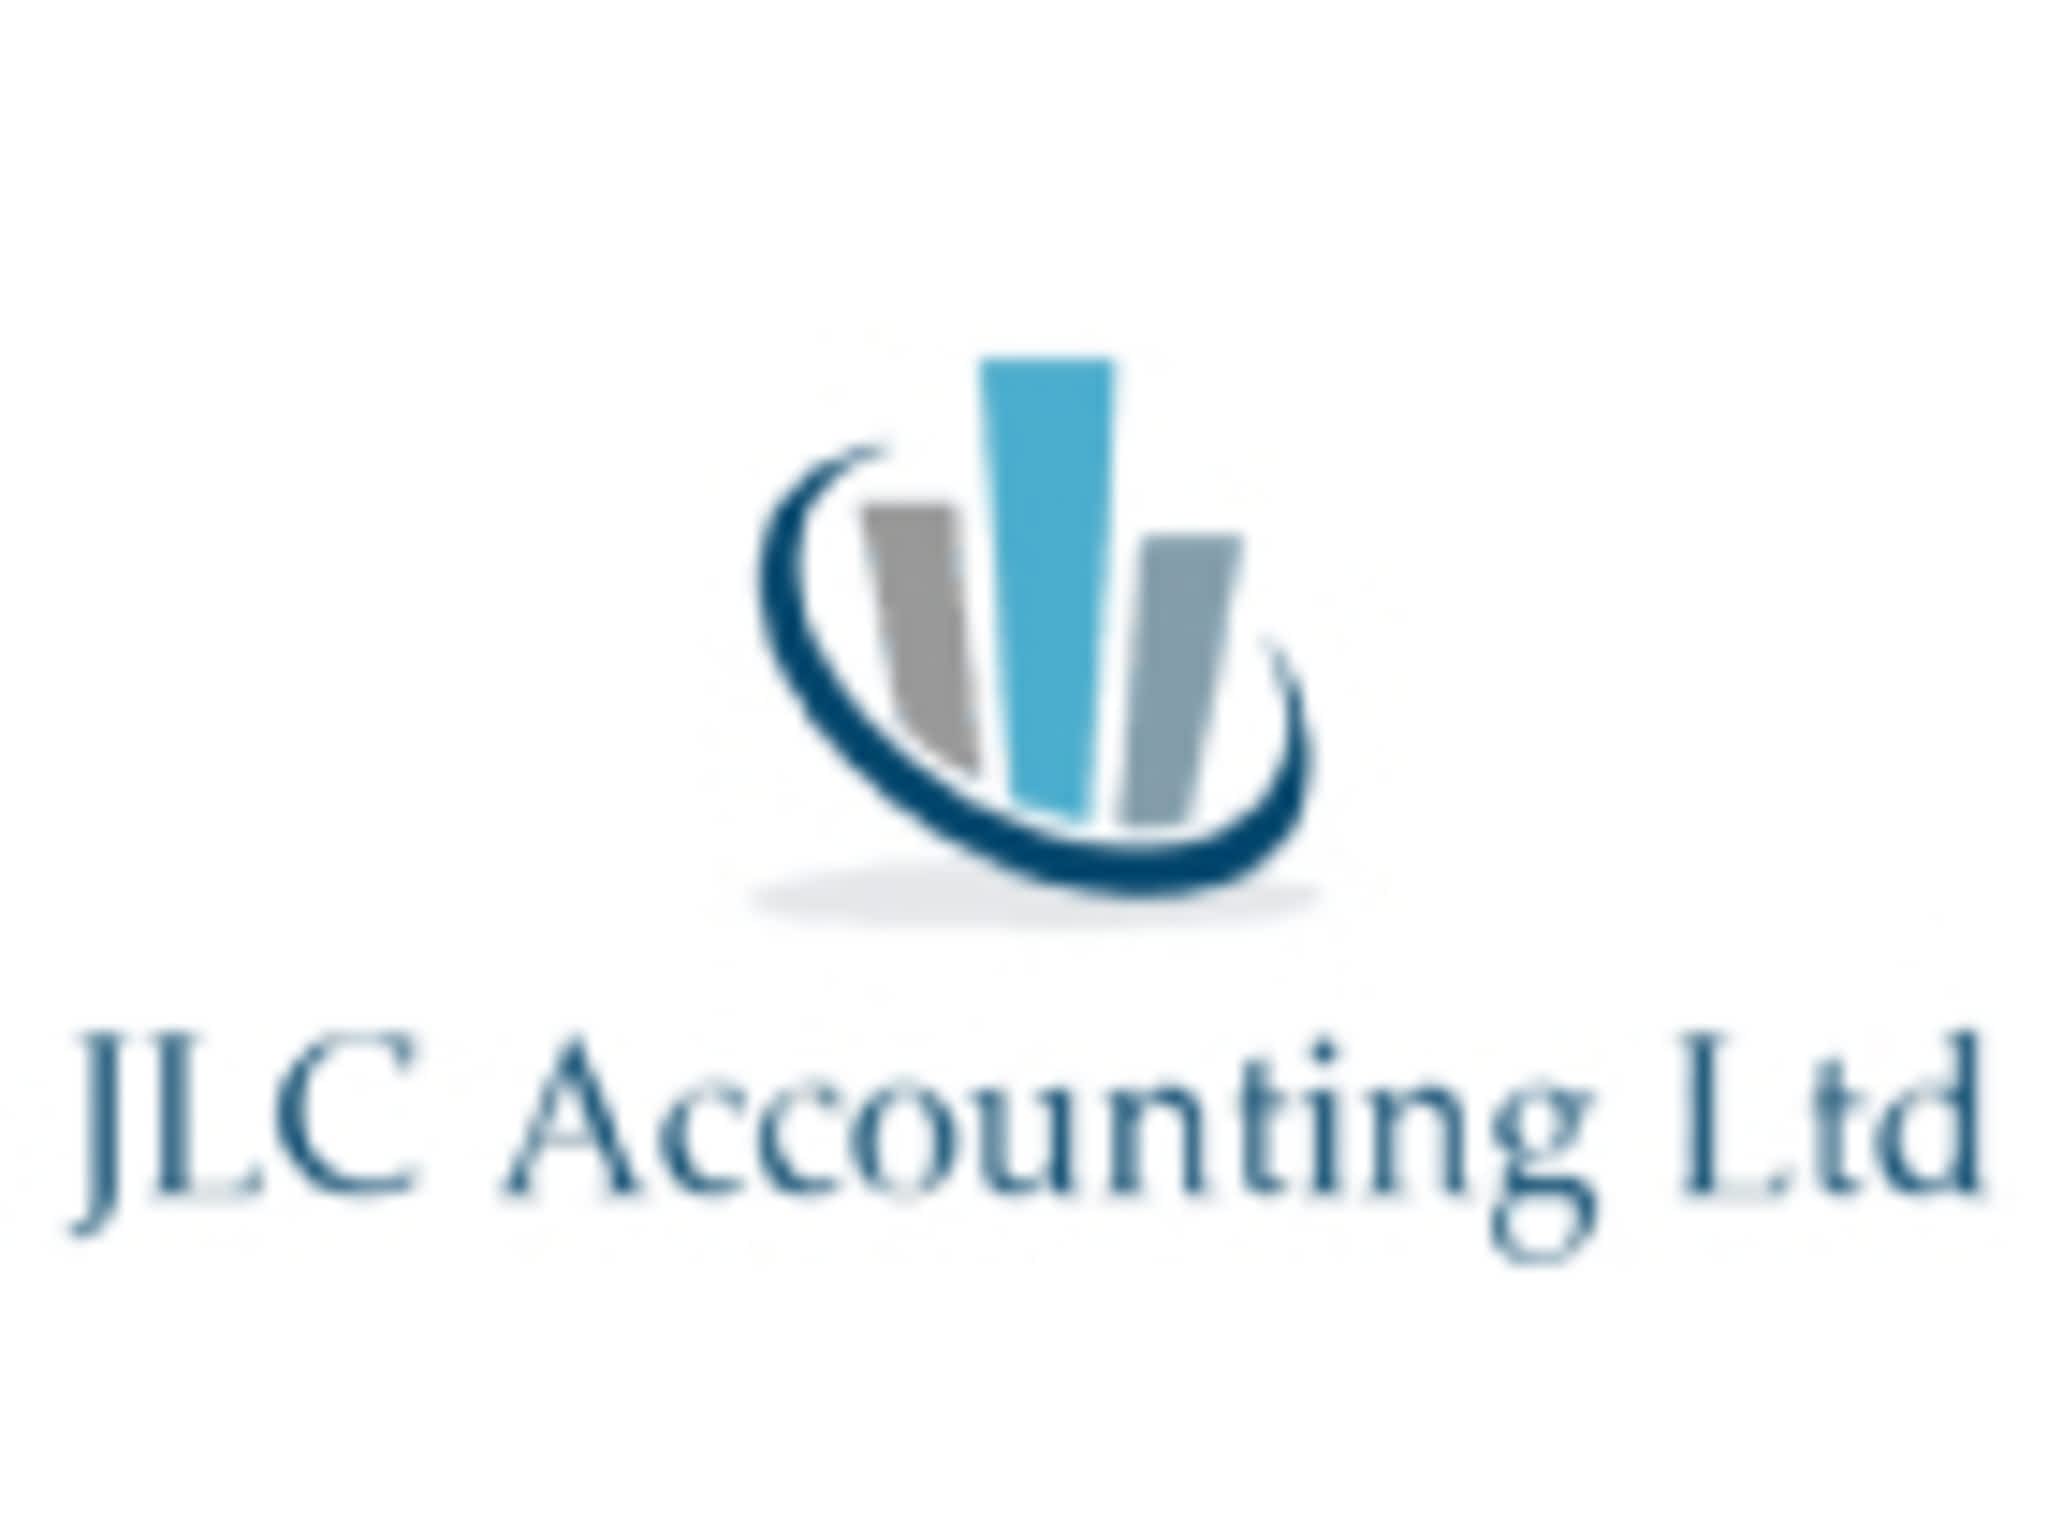 photo JLC Accounting Ltd